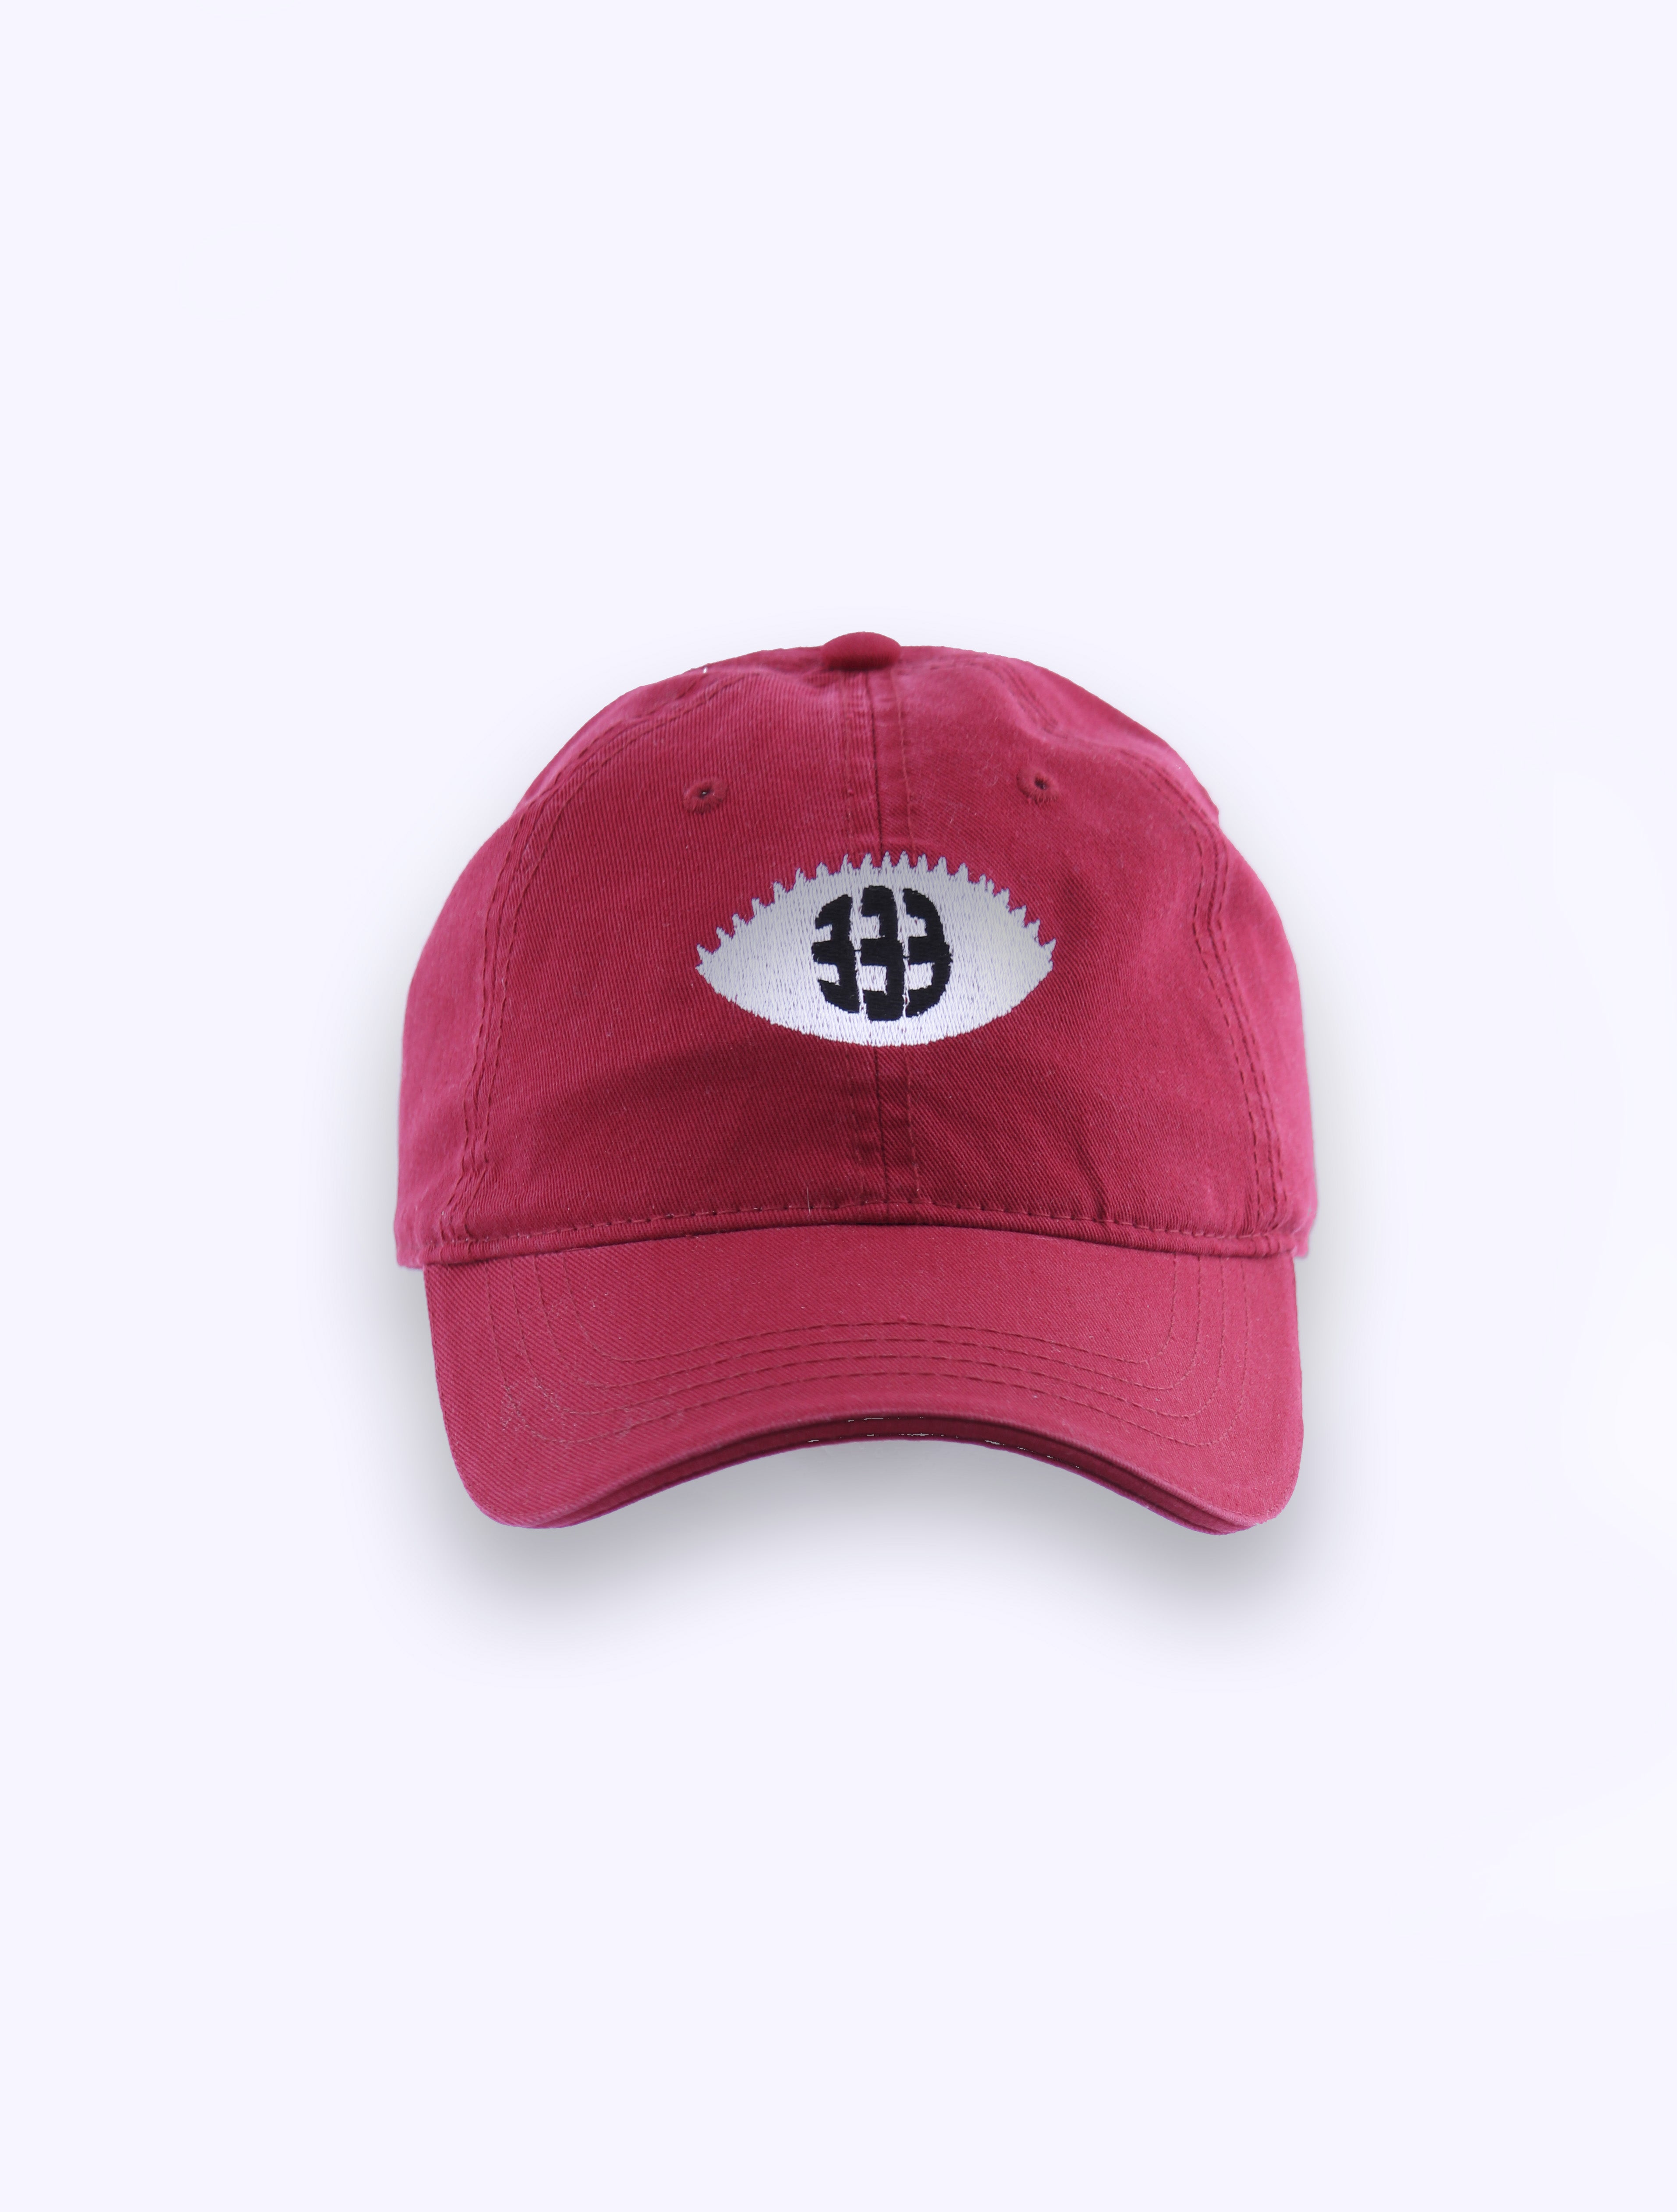 Gorra roja ojo 333